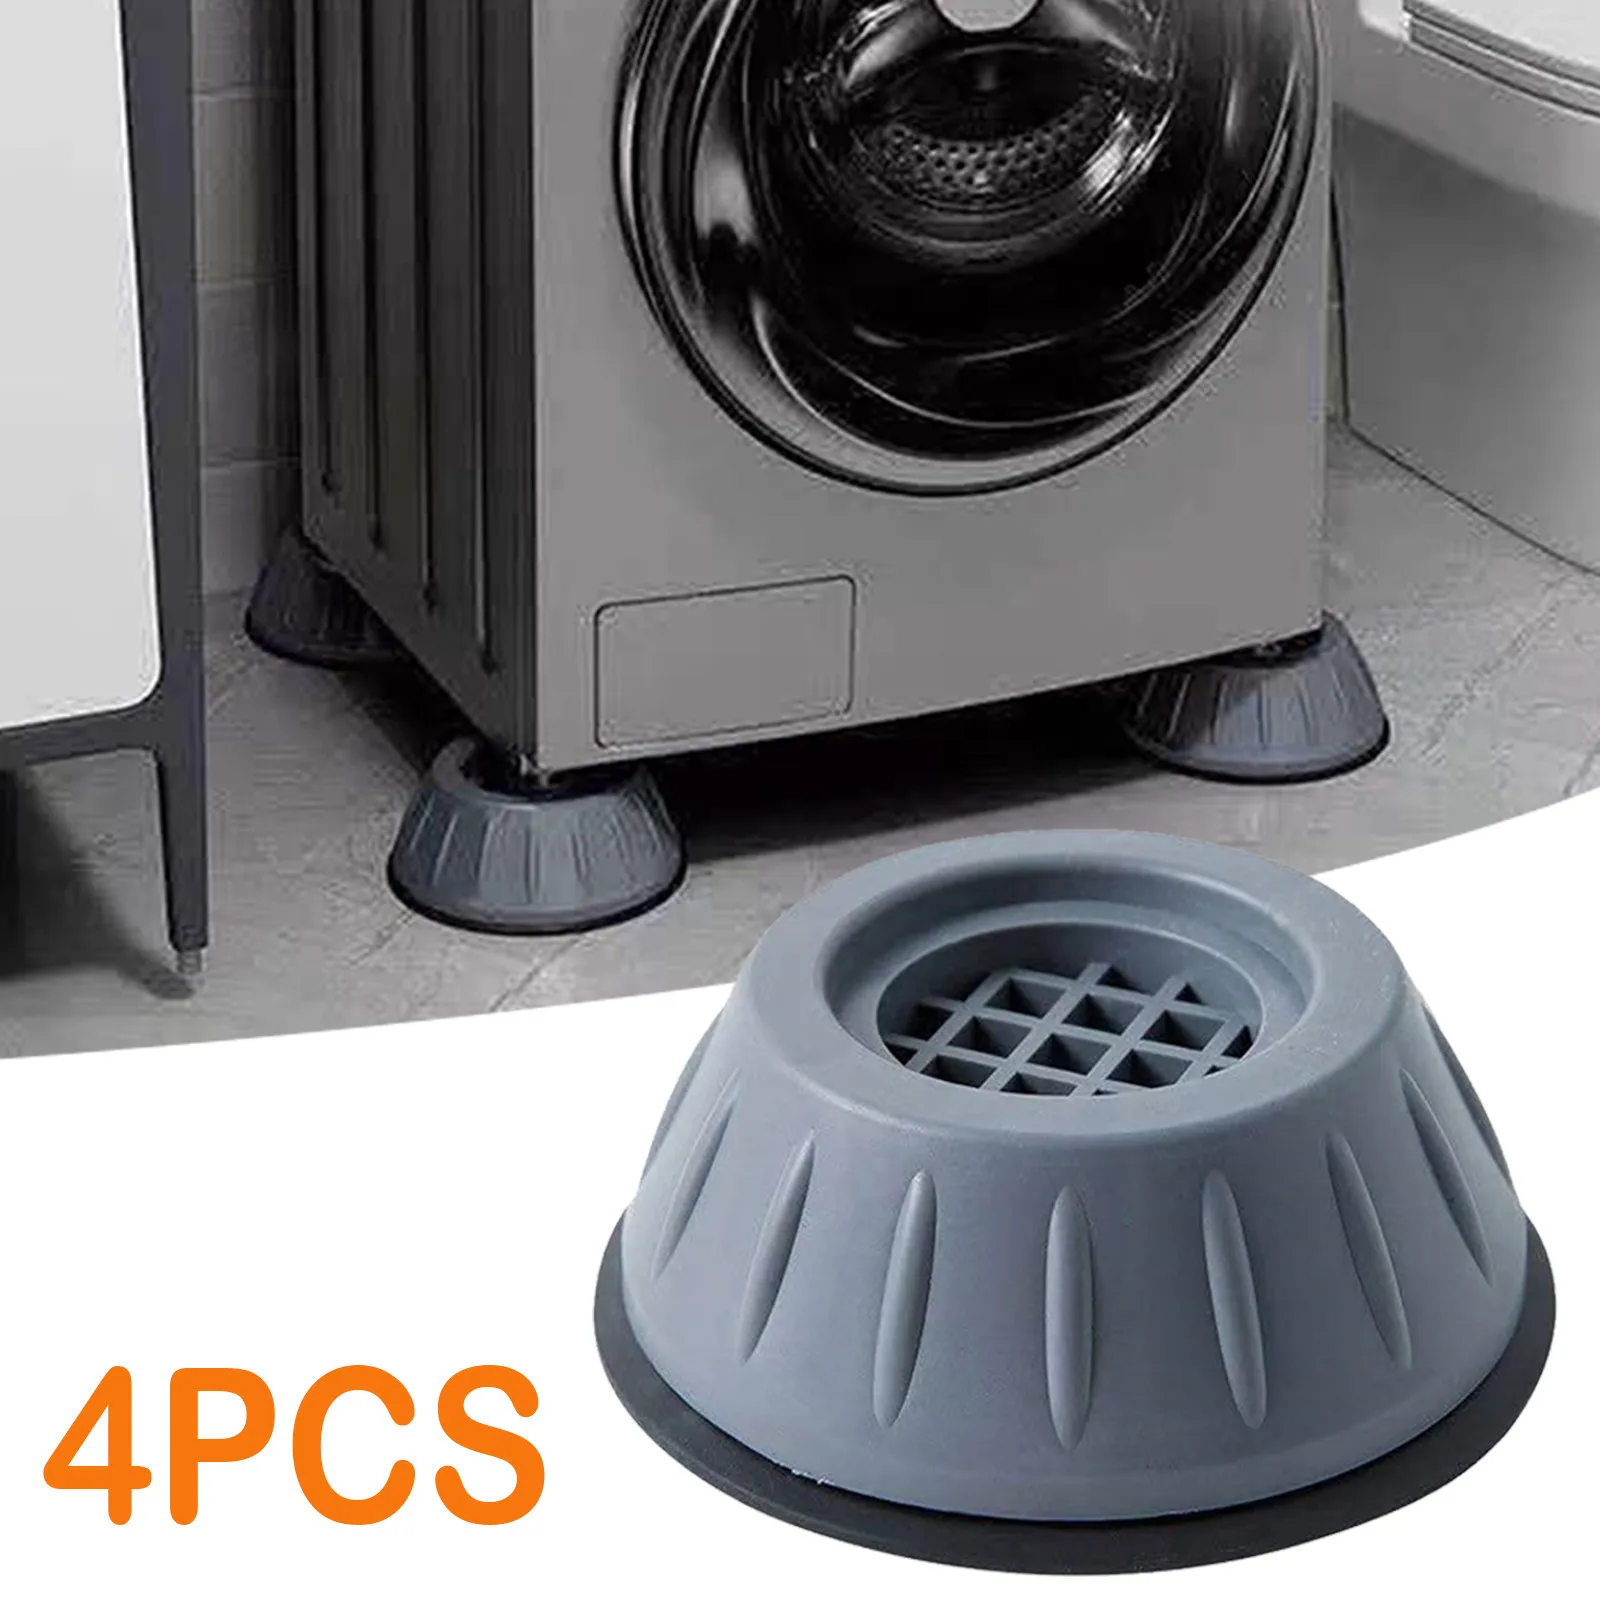 

4pcs Washing Machine Mat Anti-vibration Mute Universal Anti-skid Foot Pad Dryer Bath Mats Bathroom Protection Non-Slip Pads